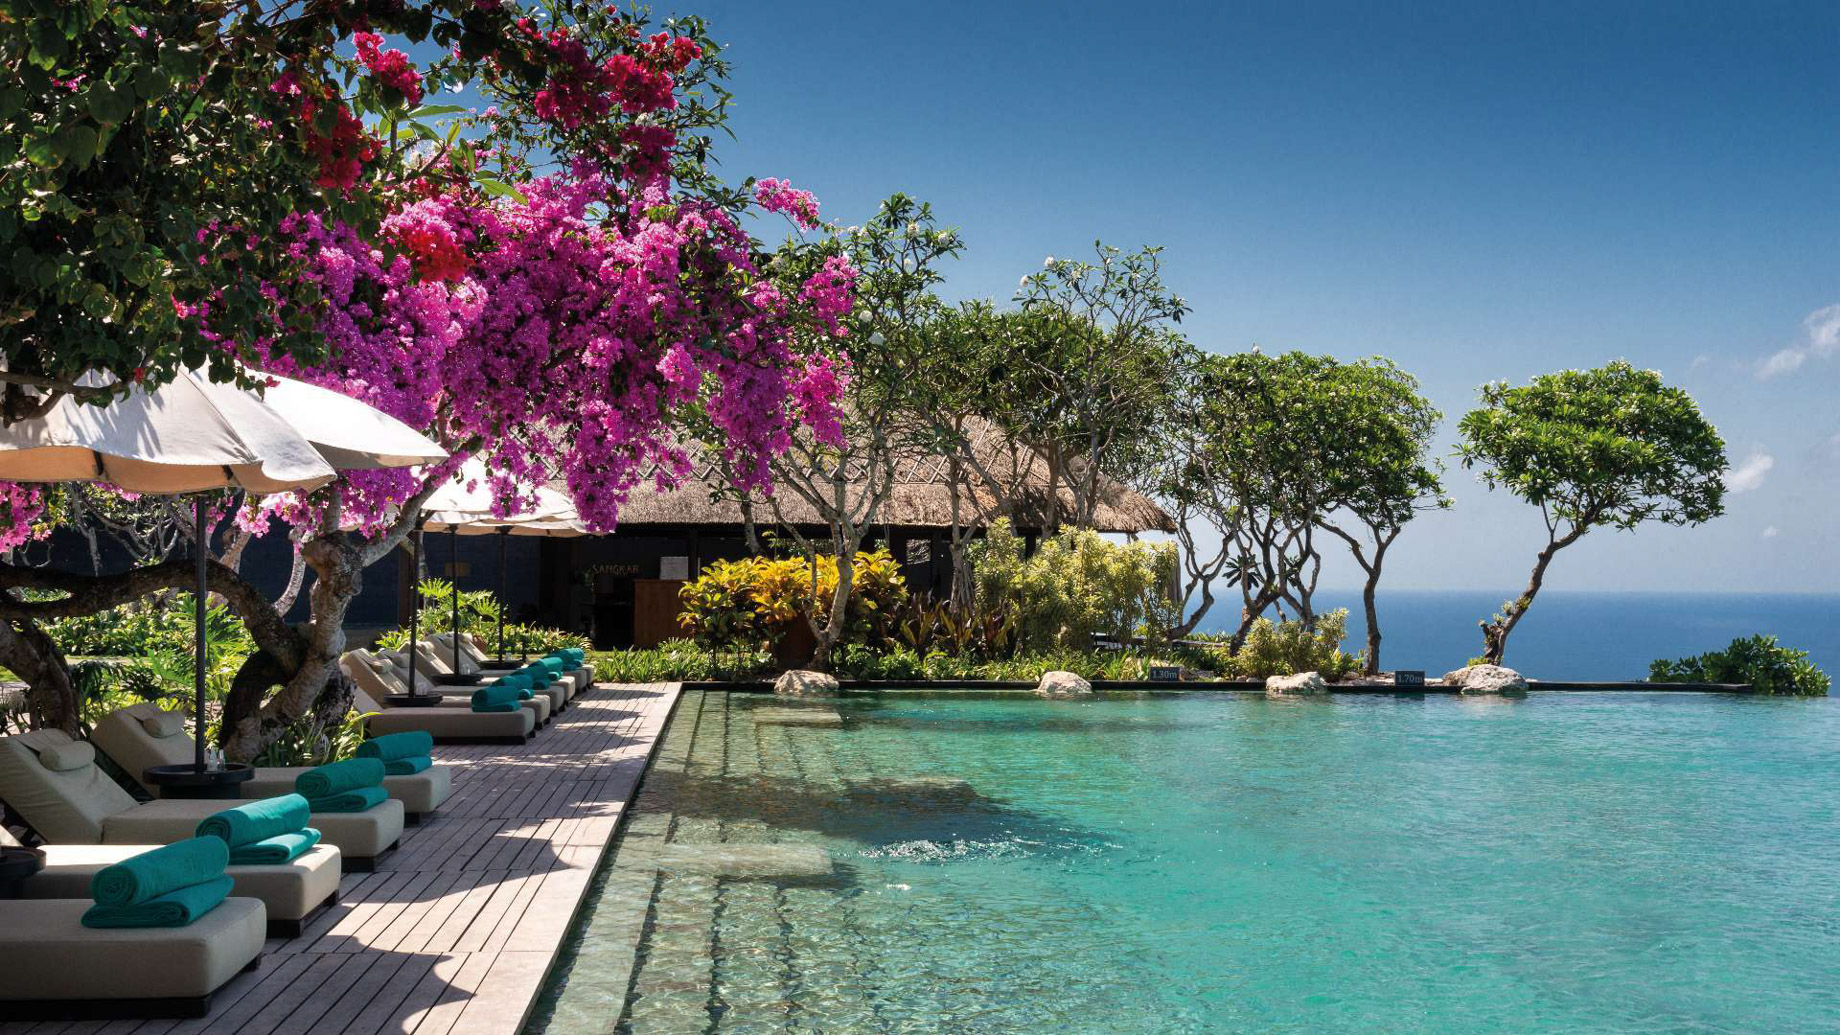 Bvlgari Resort Bali – Uluwatu, Bali, Indonesia – Resort Infinity Pool Deck